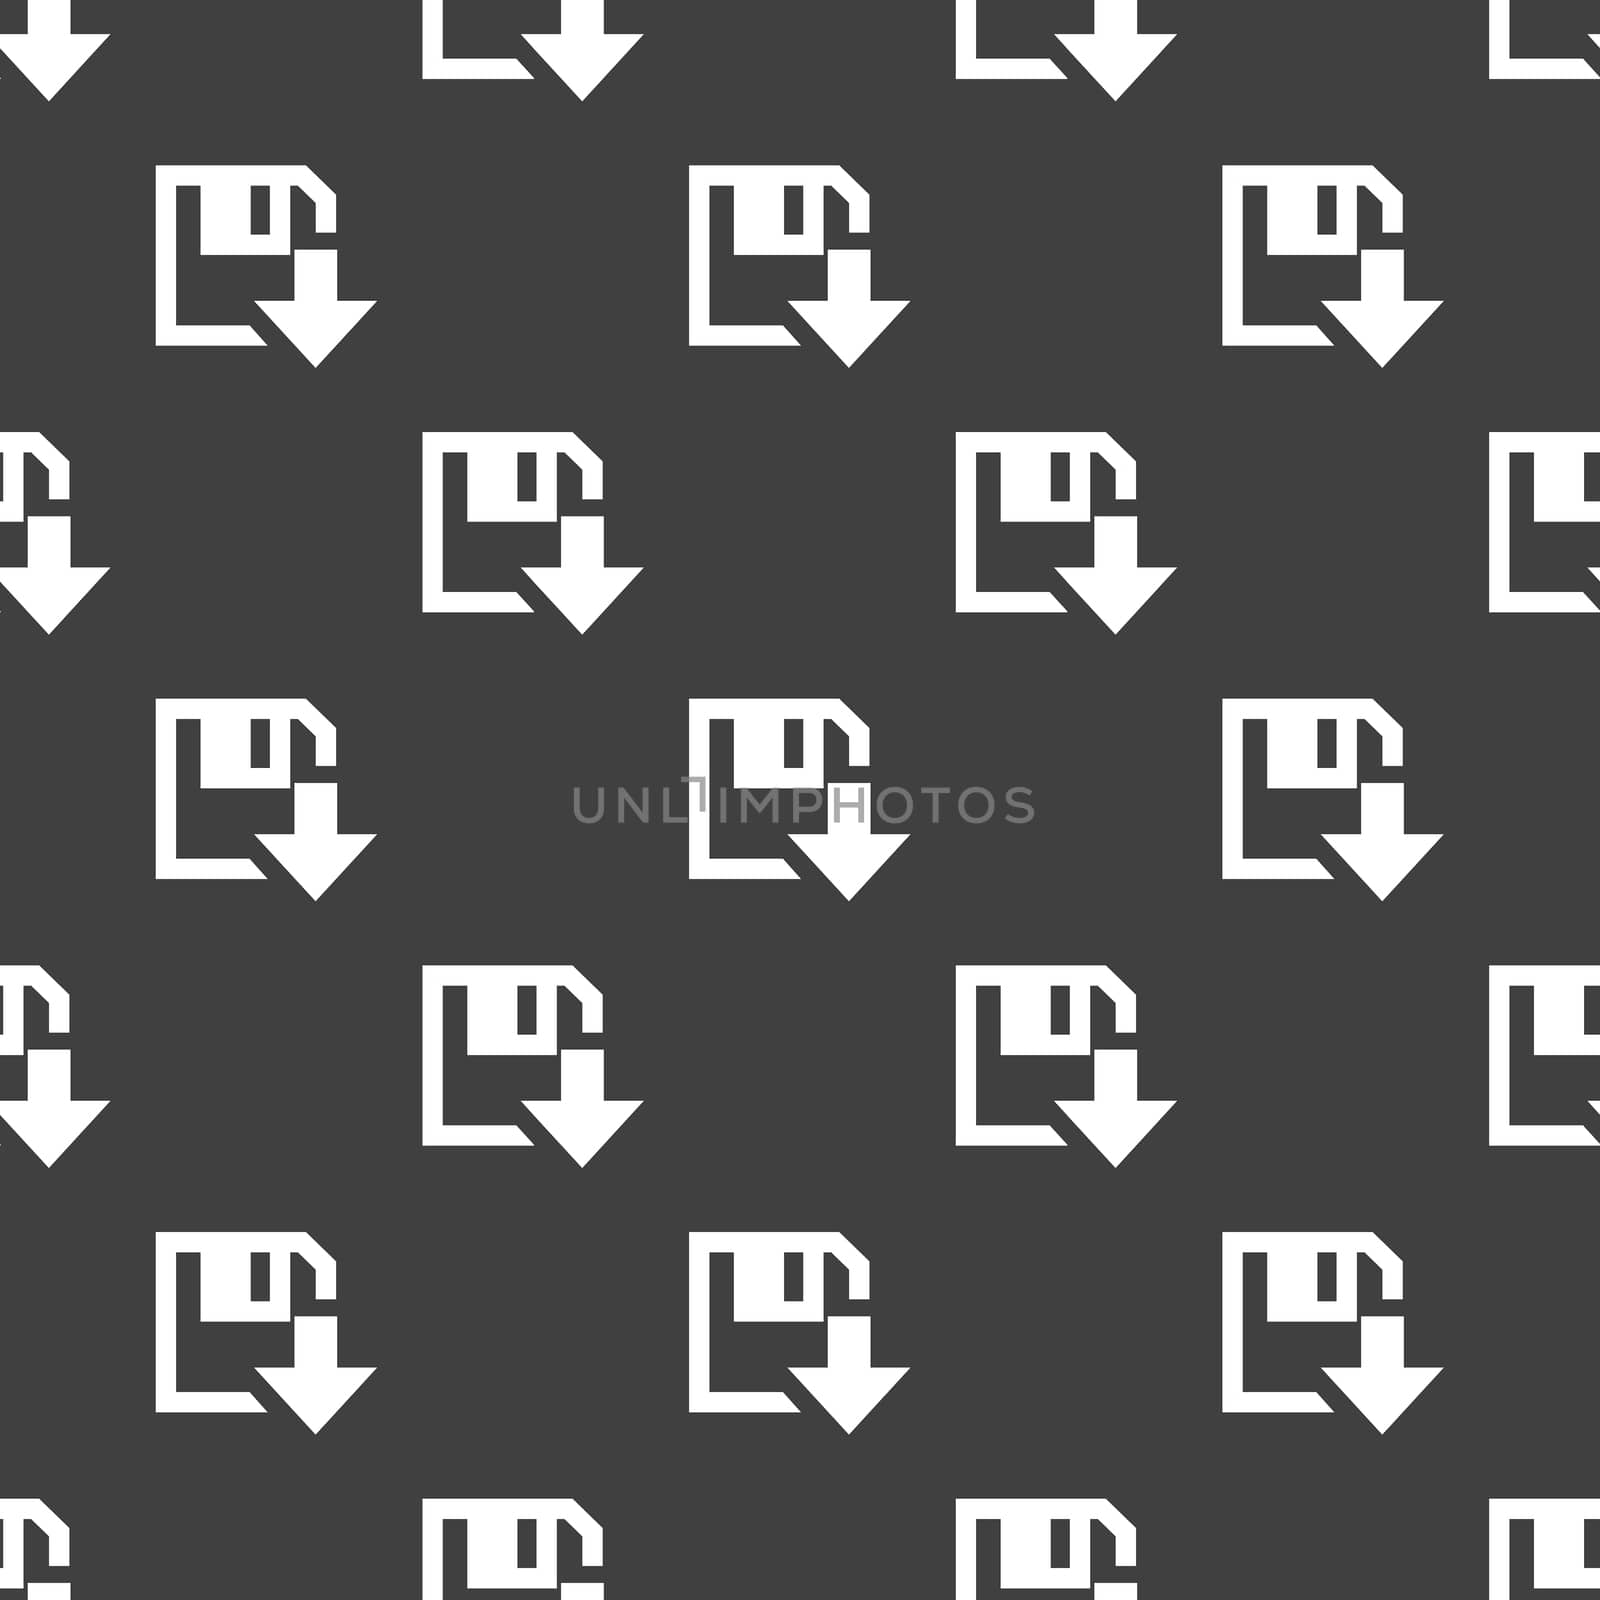 floppy disk download web icon. flat design. Seamless gray pattern. by serhii_lohvyniuk